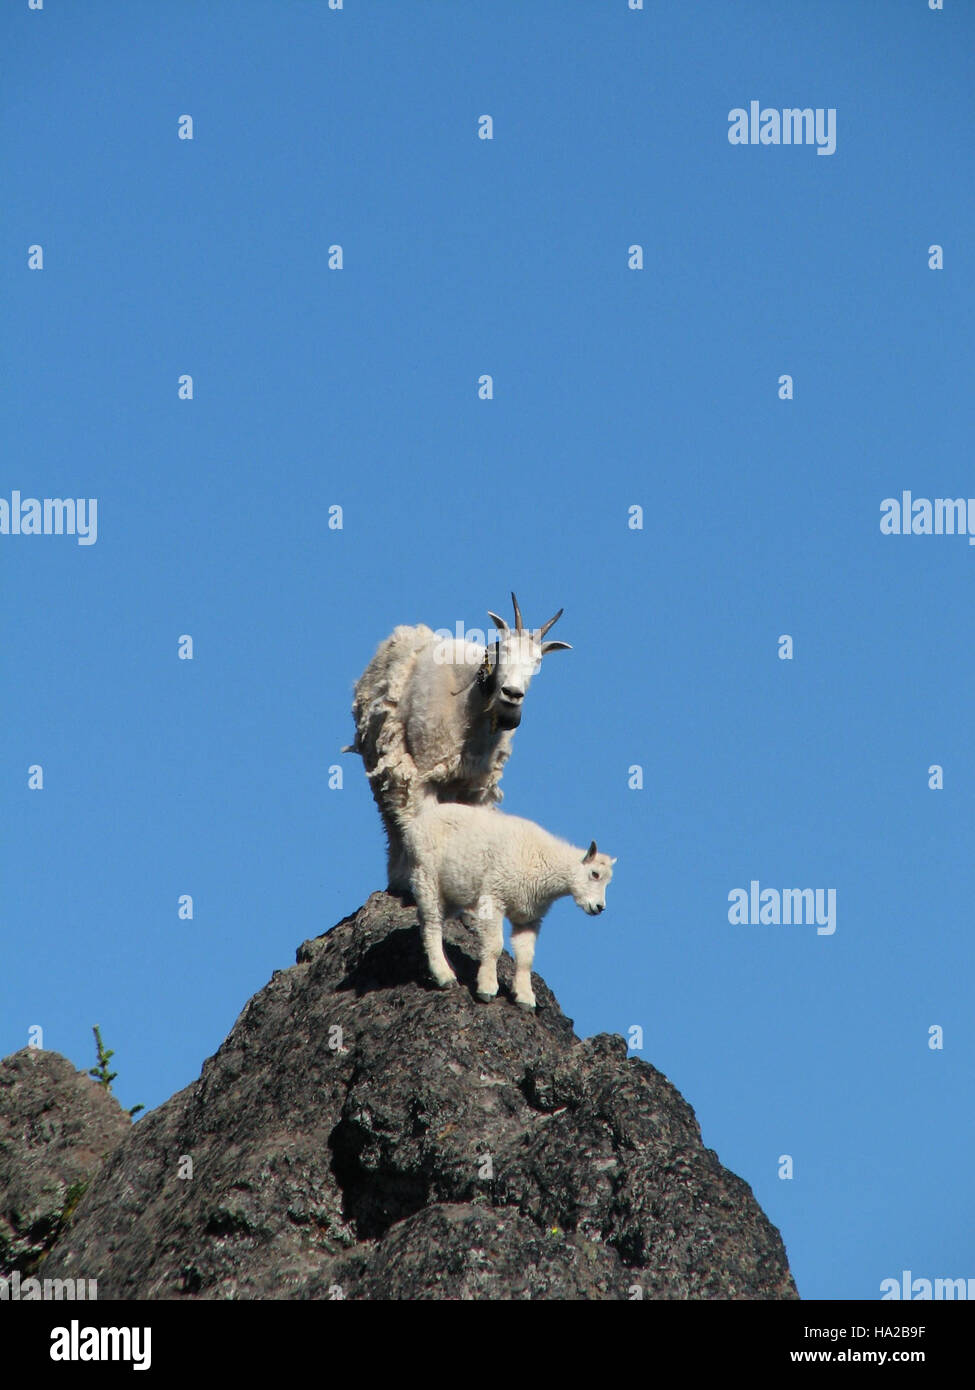 olympicnps 23101020805 goats kid rock climbing WIC NPS Photo Stock Photo